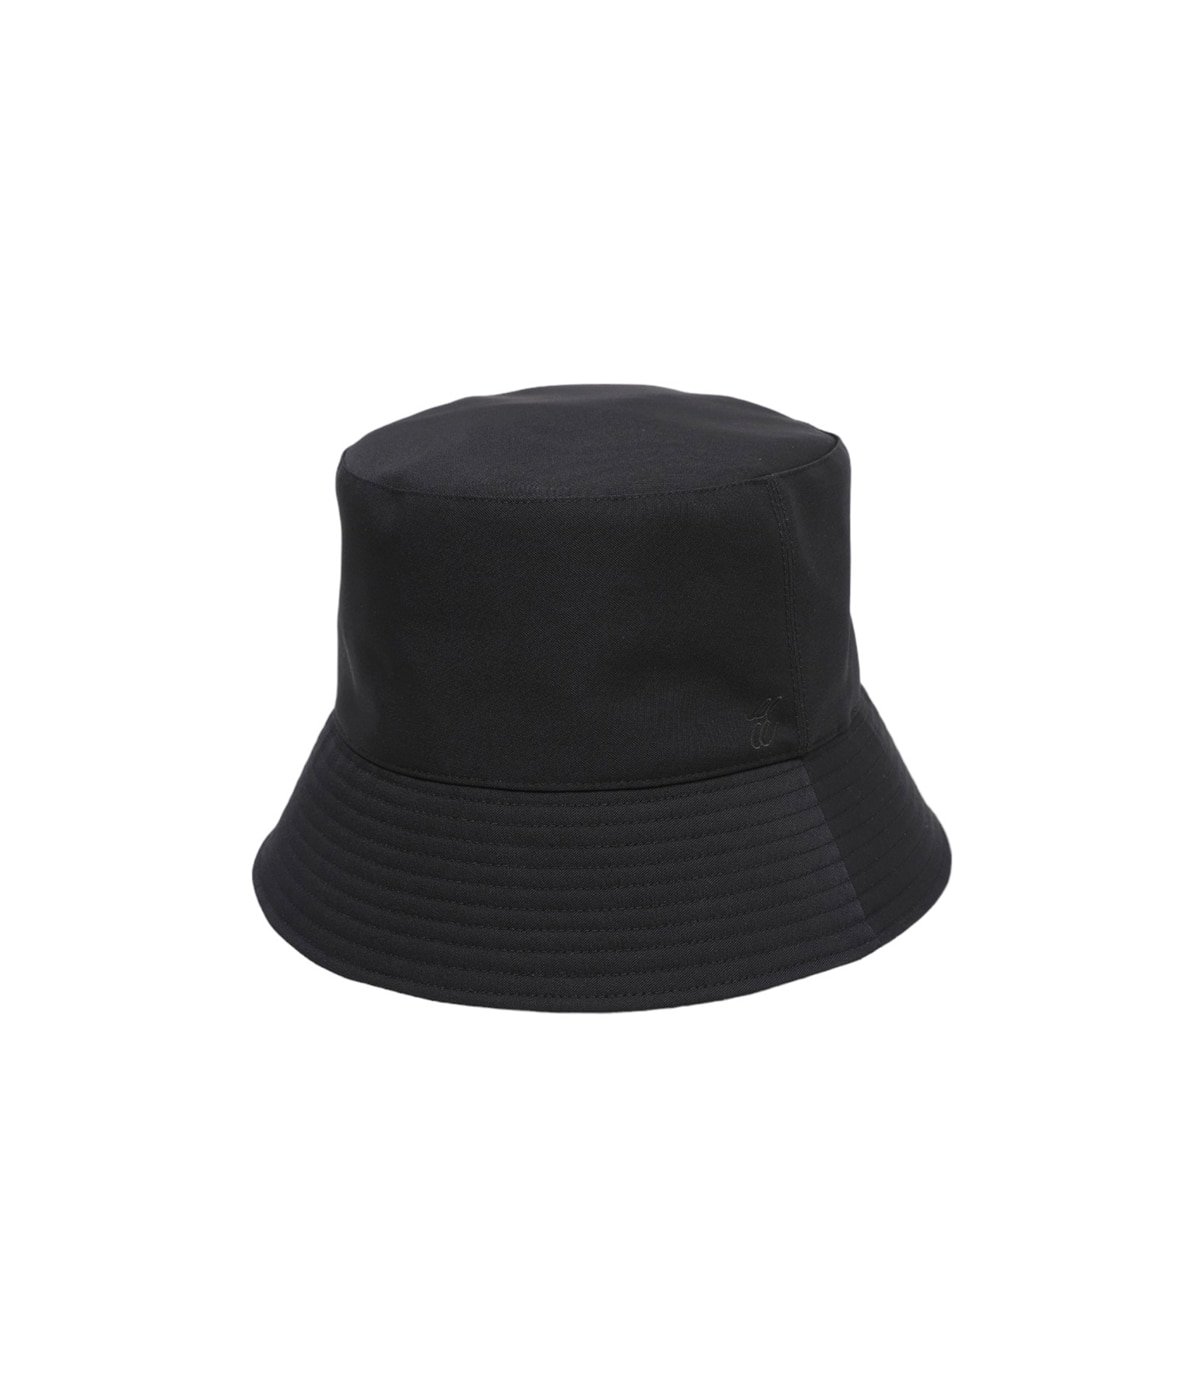 Dan hat | ENTWURFEIN(エントワフェイン) / 帽子 ハット (メンズ 